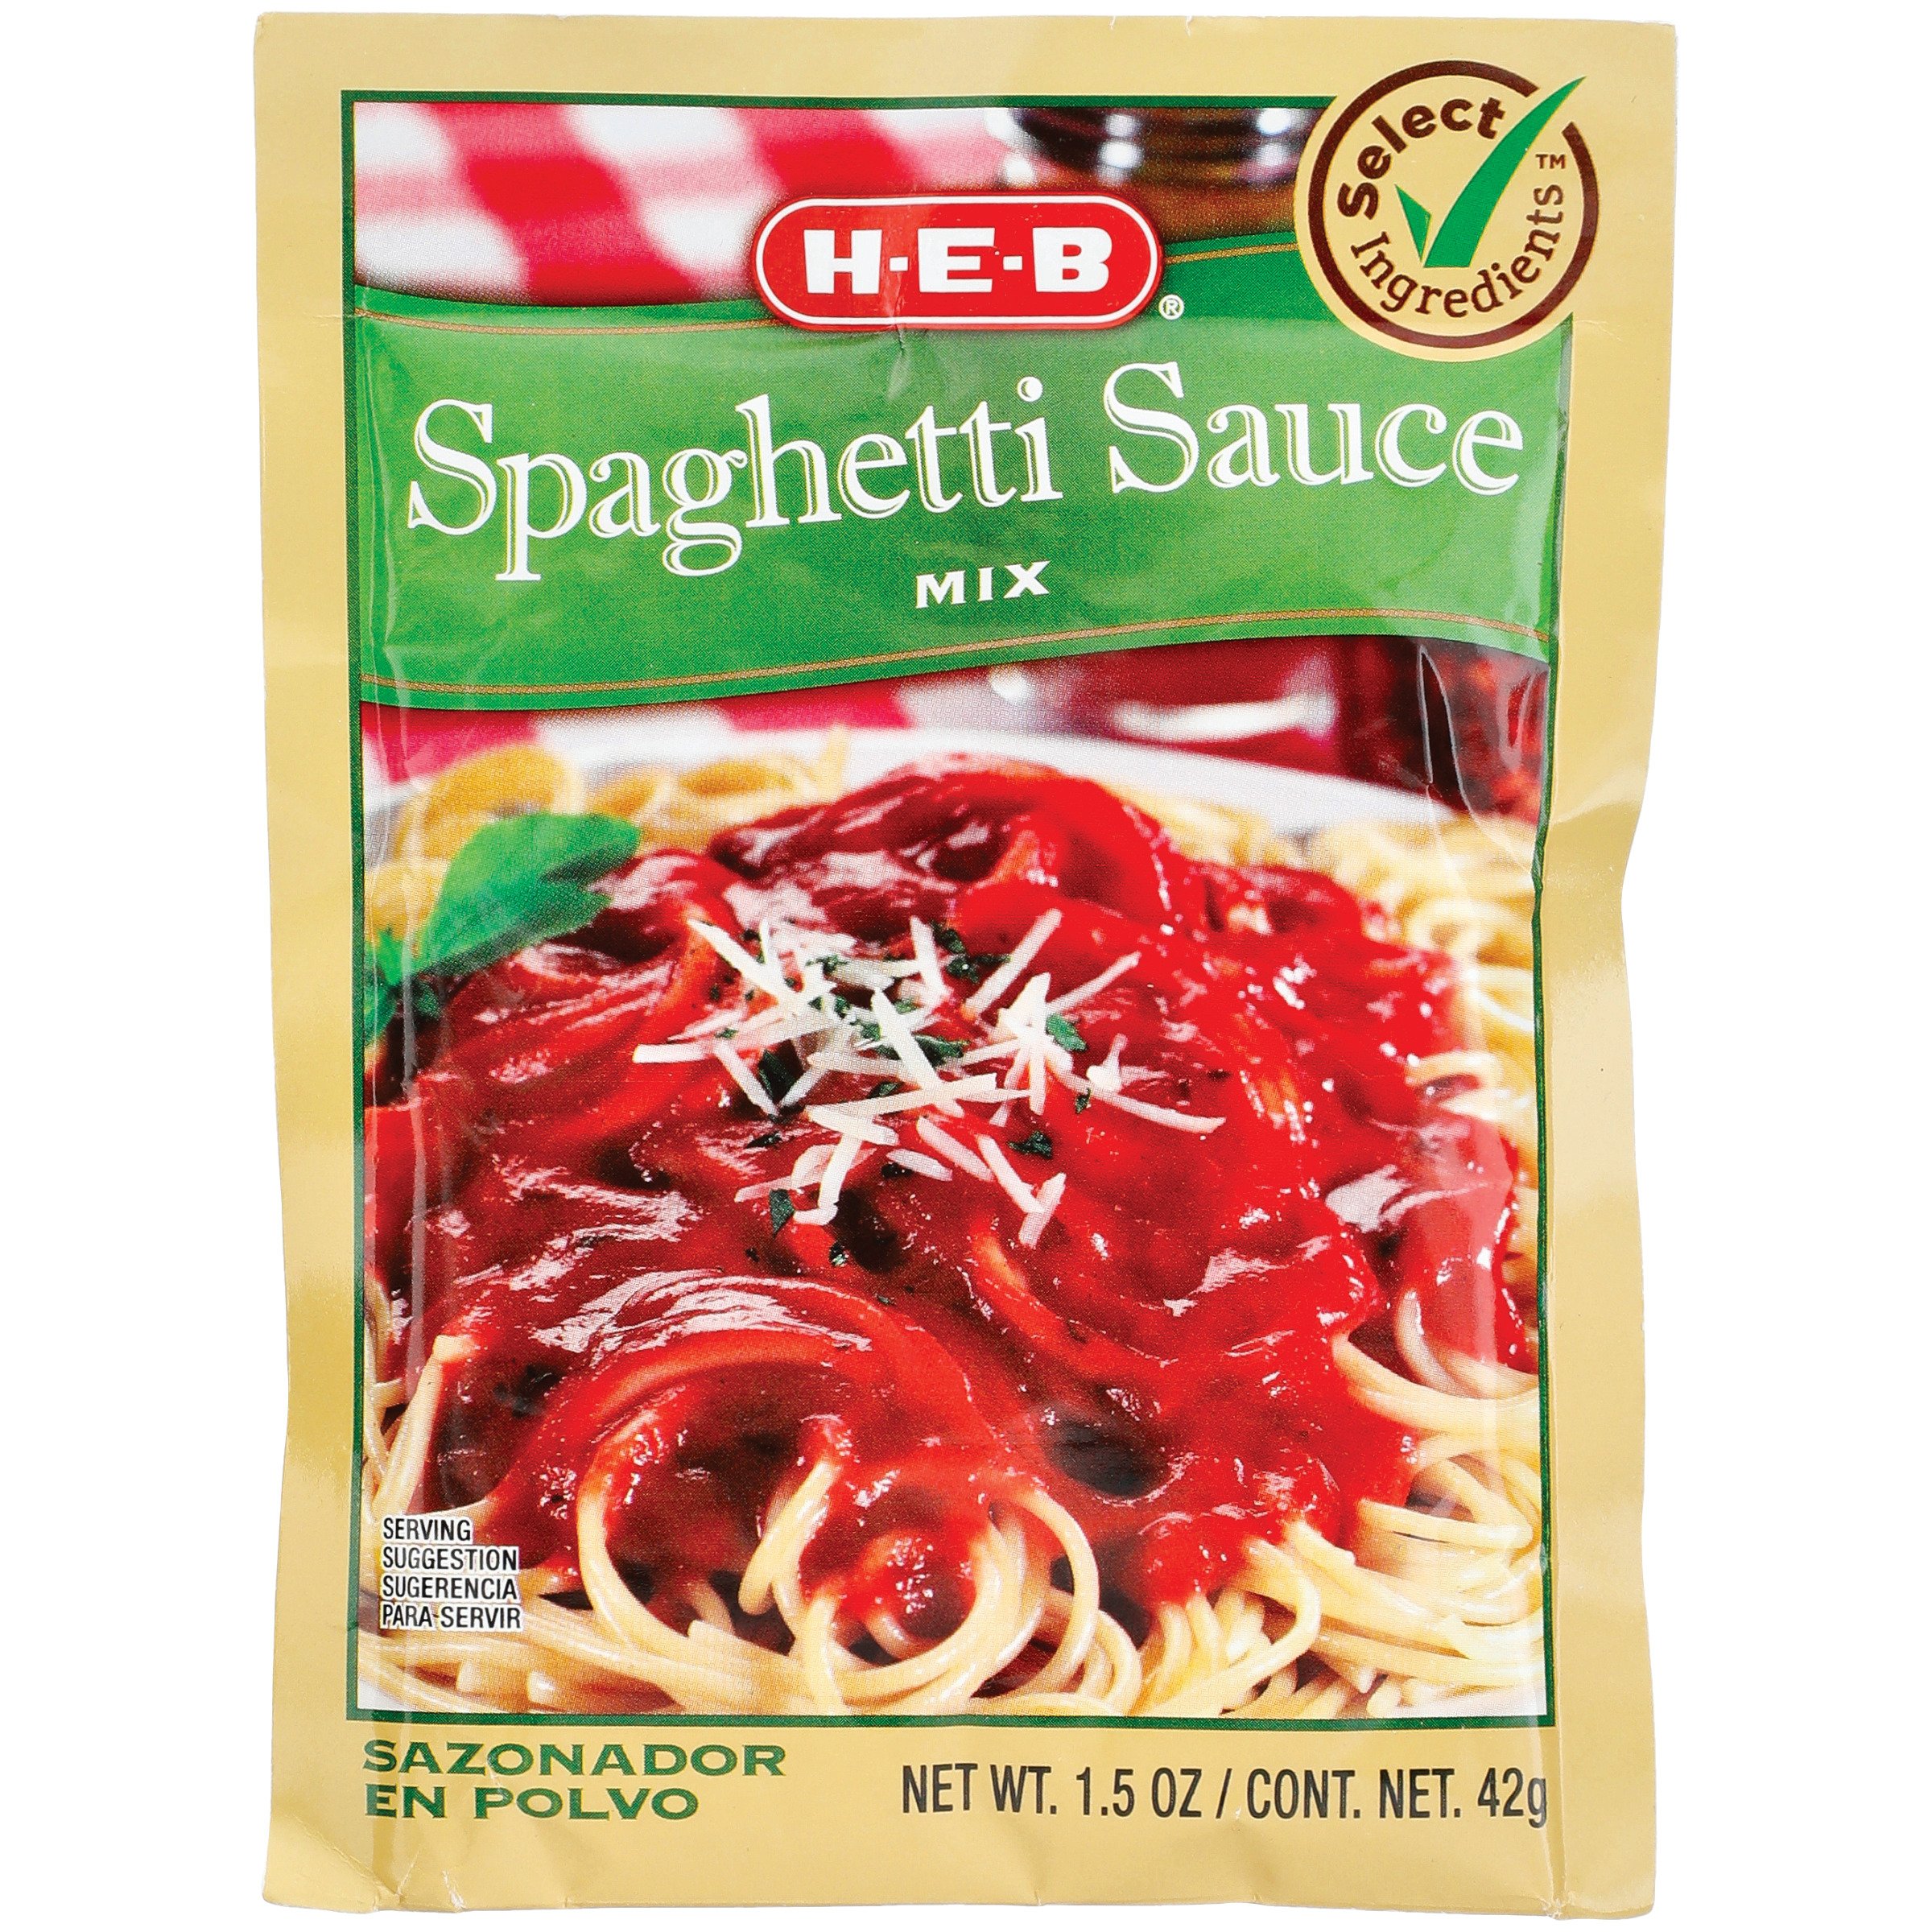 Lawry's Spatini Spaghetti Sauce 15 Ounce Size - 6 Per Case.